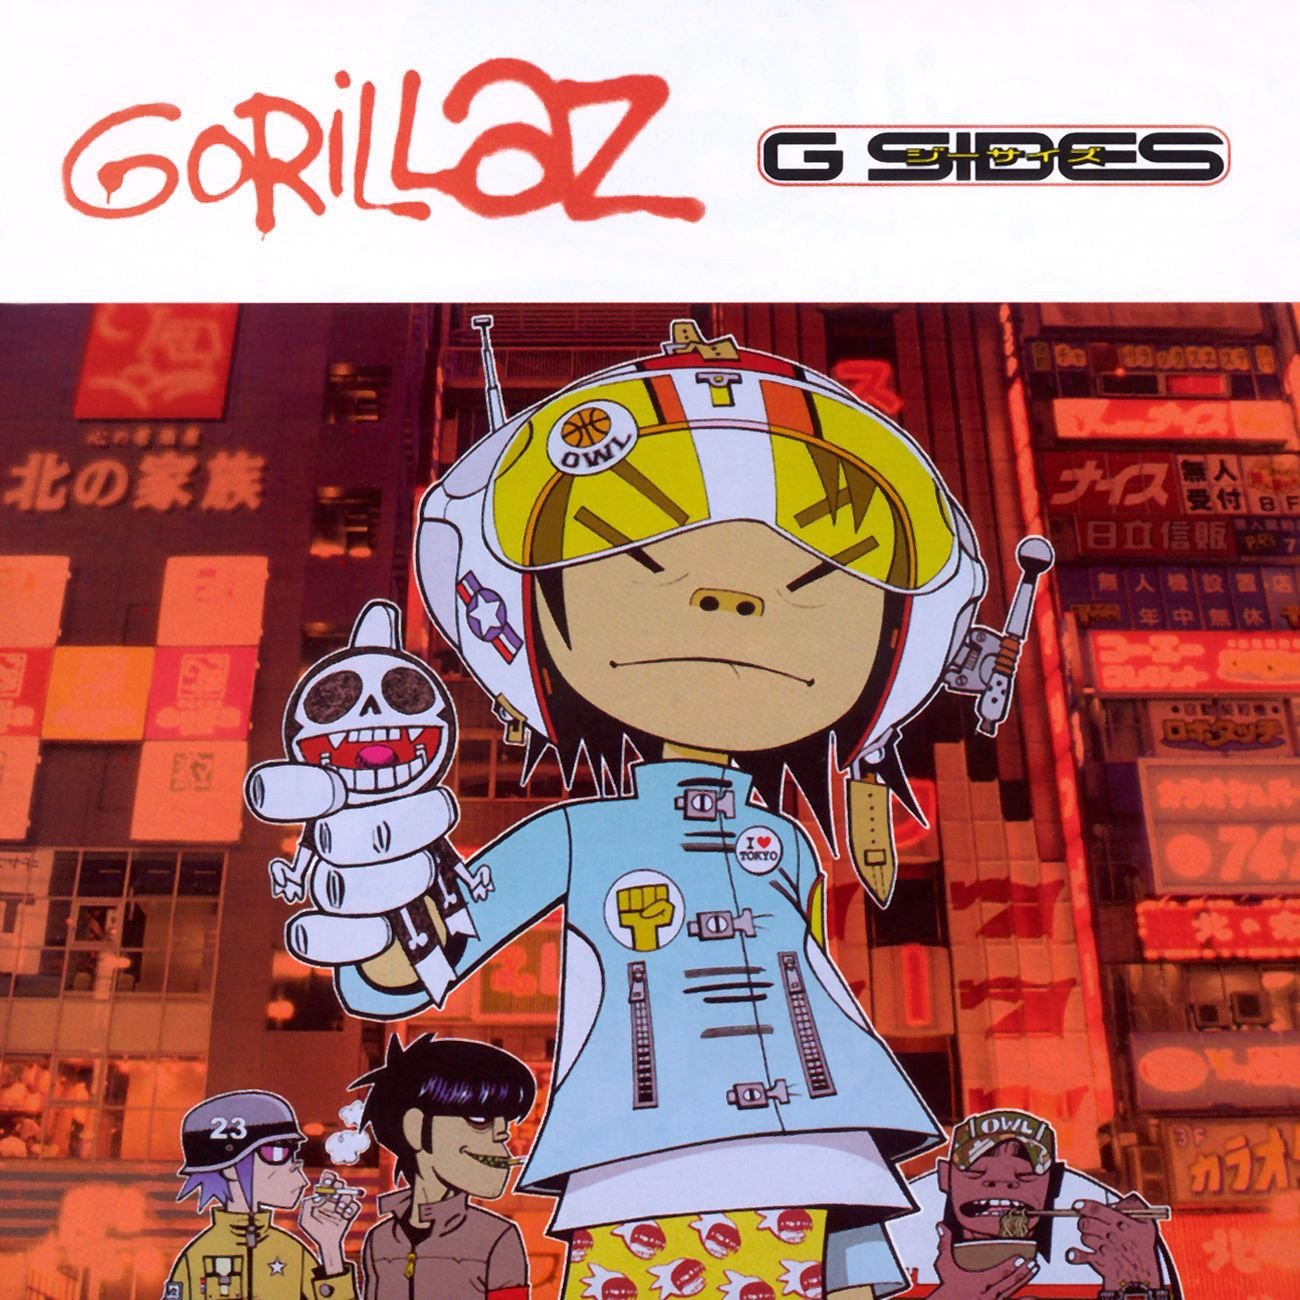 Gorillaz - G Sides (CD)